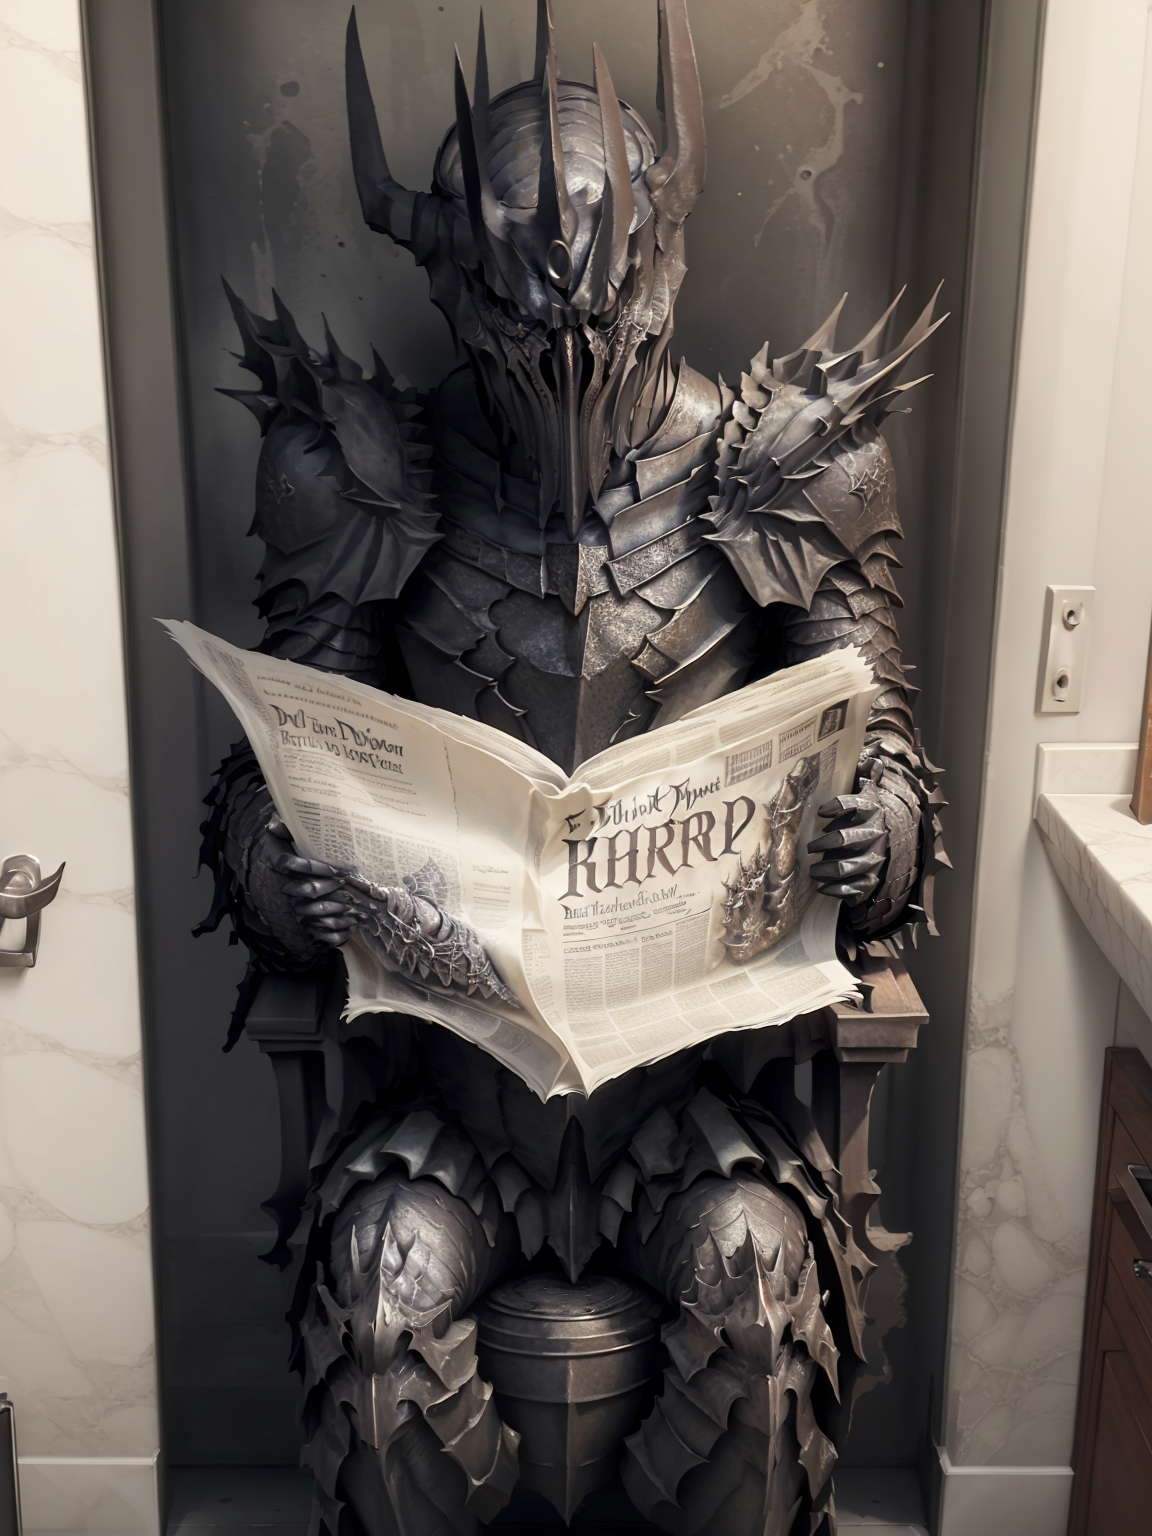 Dark Lord Sauron sitting on a toilet in the bathroom